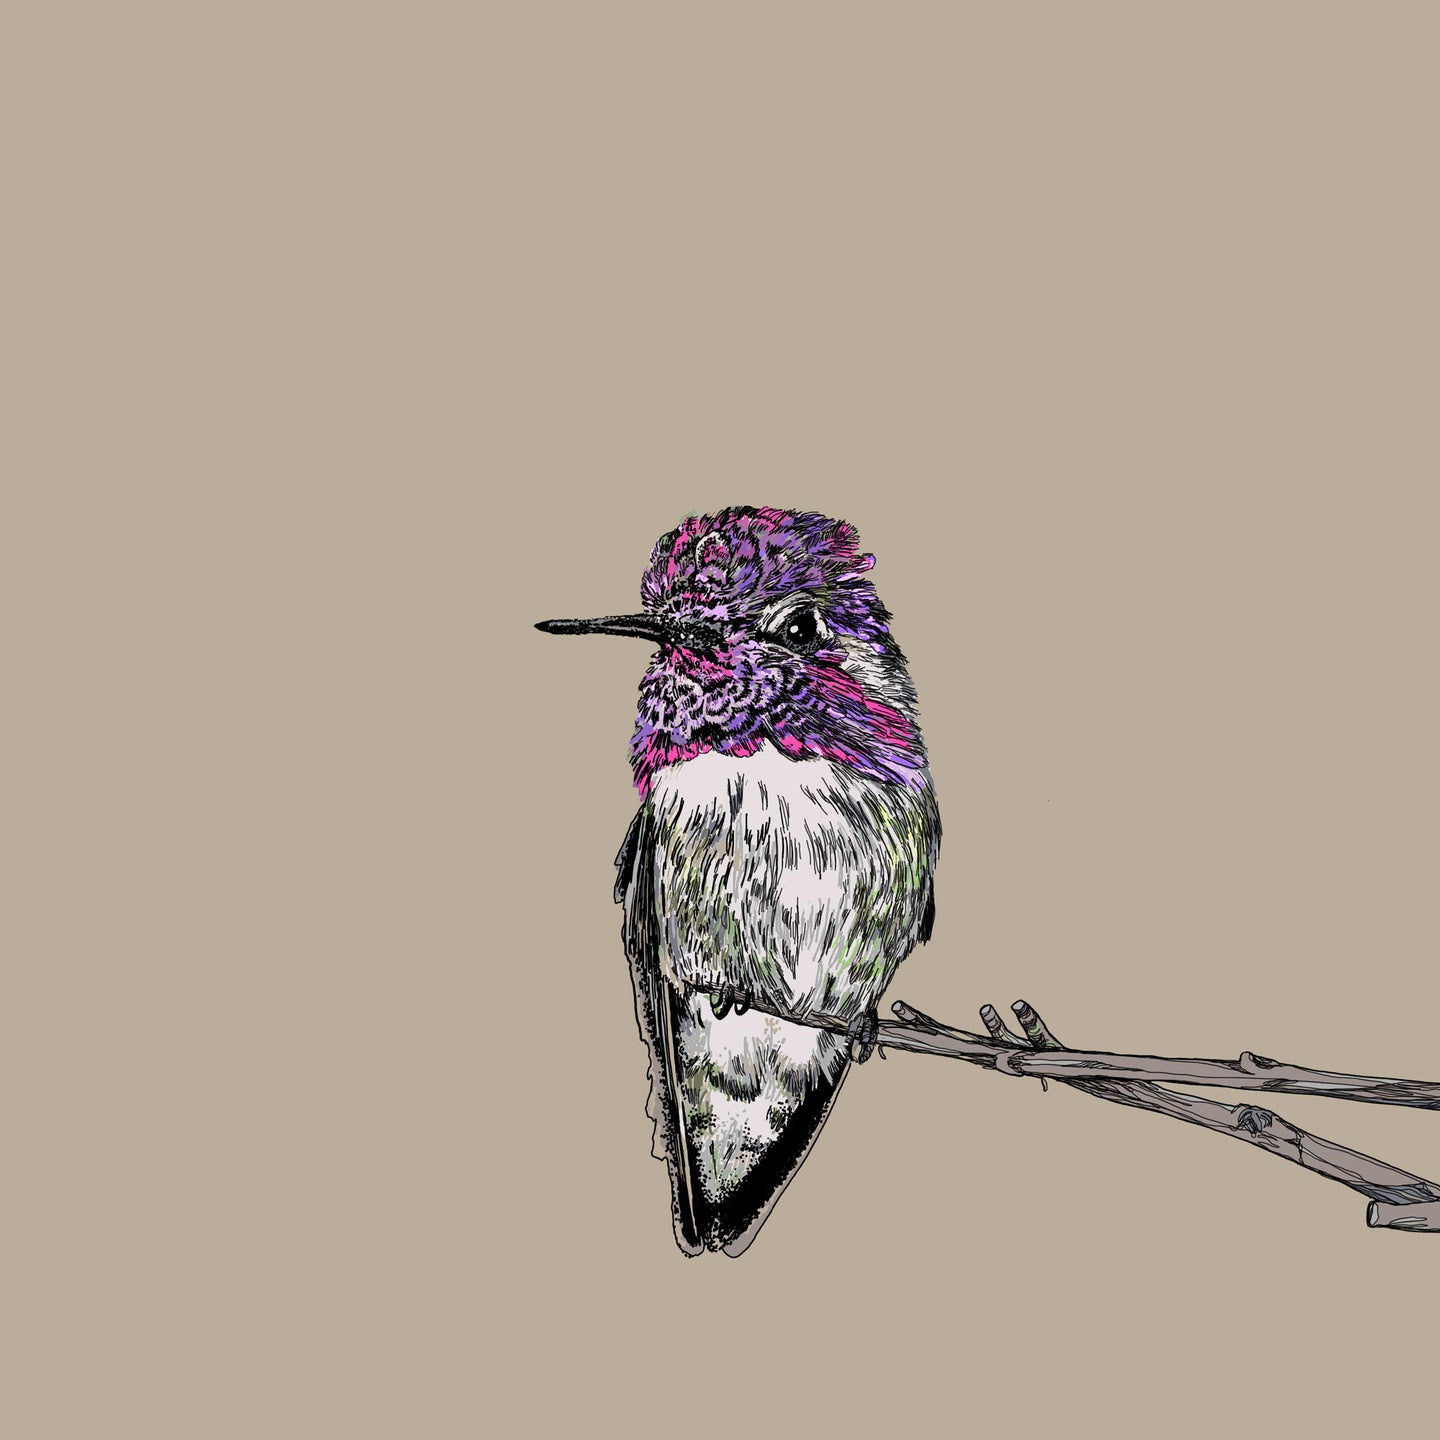 Costa's hummingbird